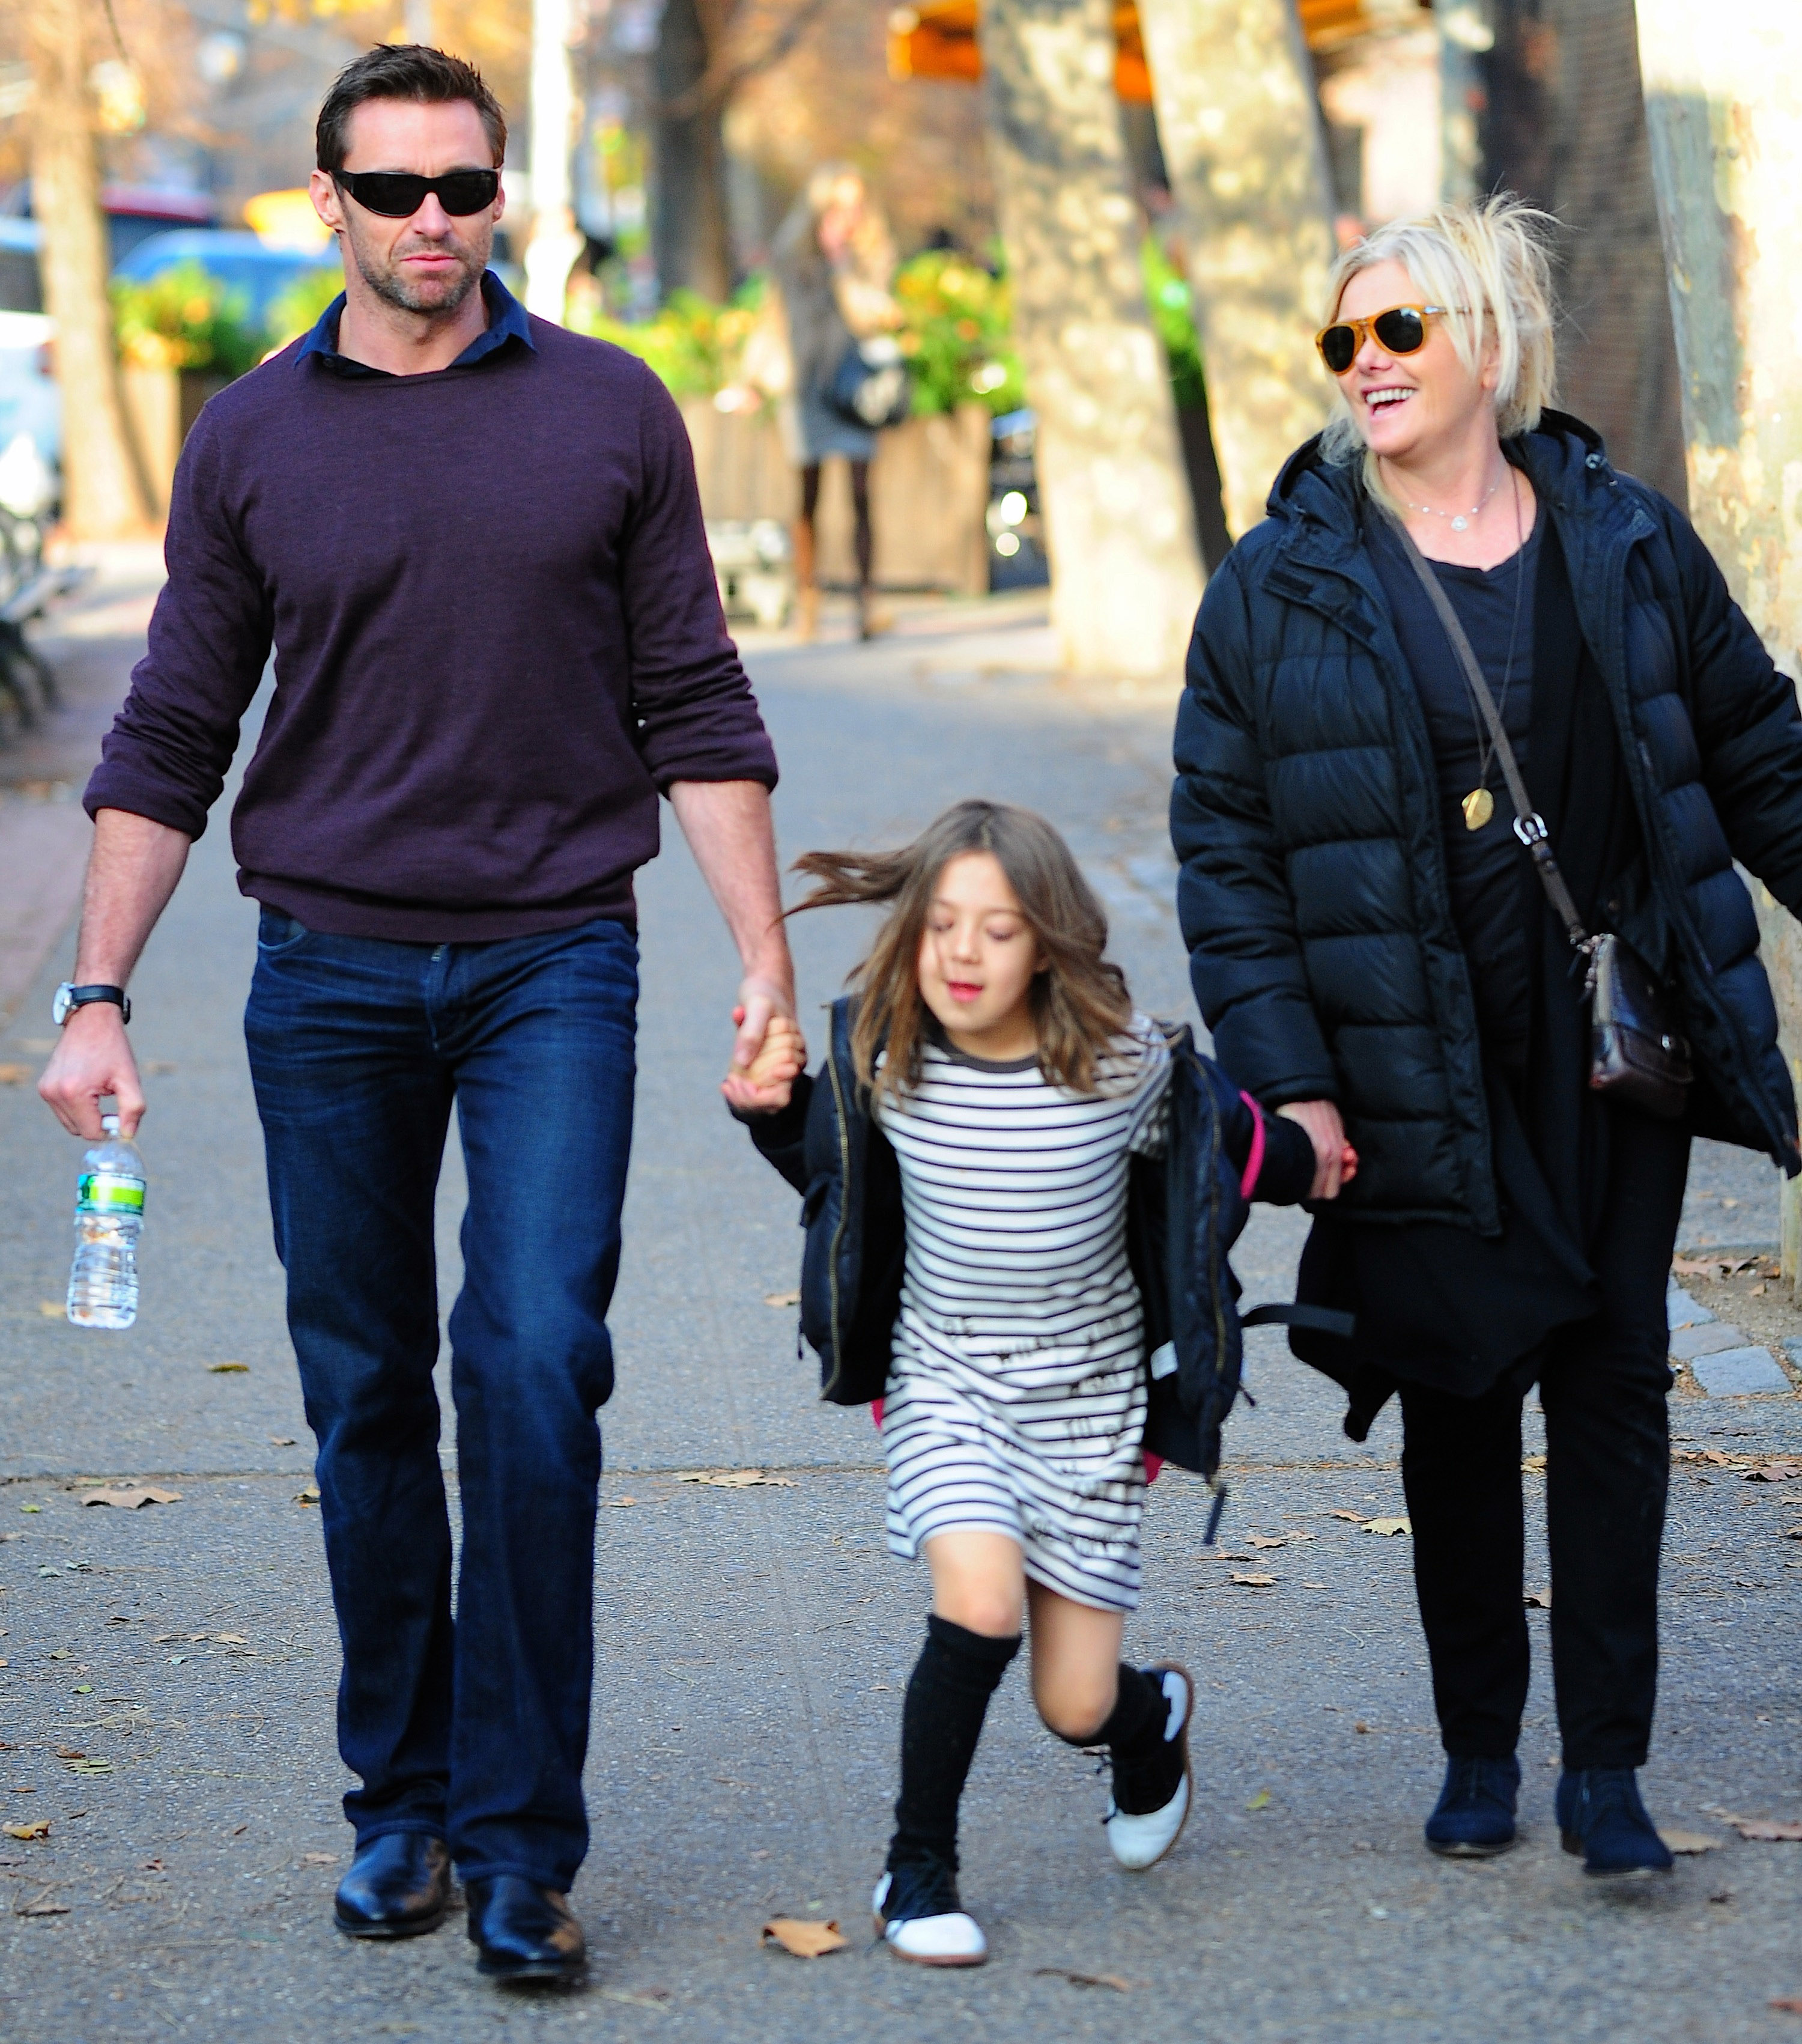 Hugh Jackman, Ava Eliot Jackman, and Deborra-Lee Furness walk in New York City on December 3, 2012 | Source: Getty Images